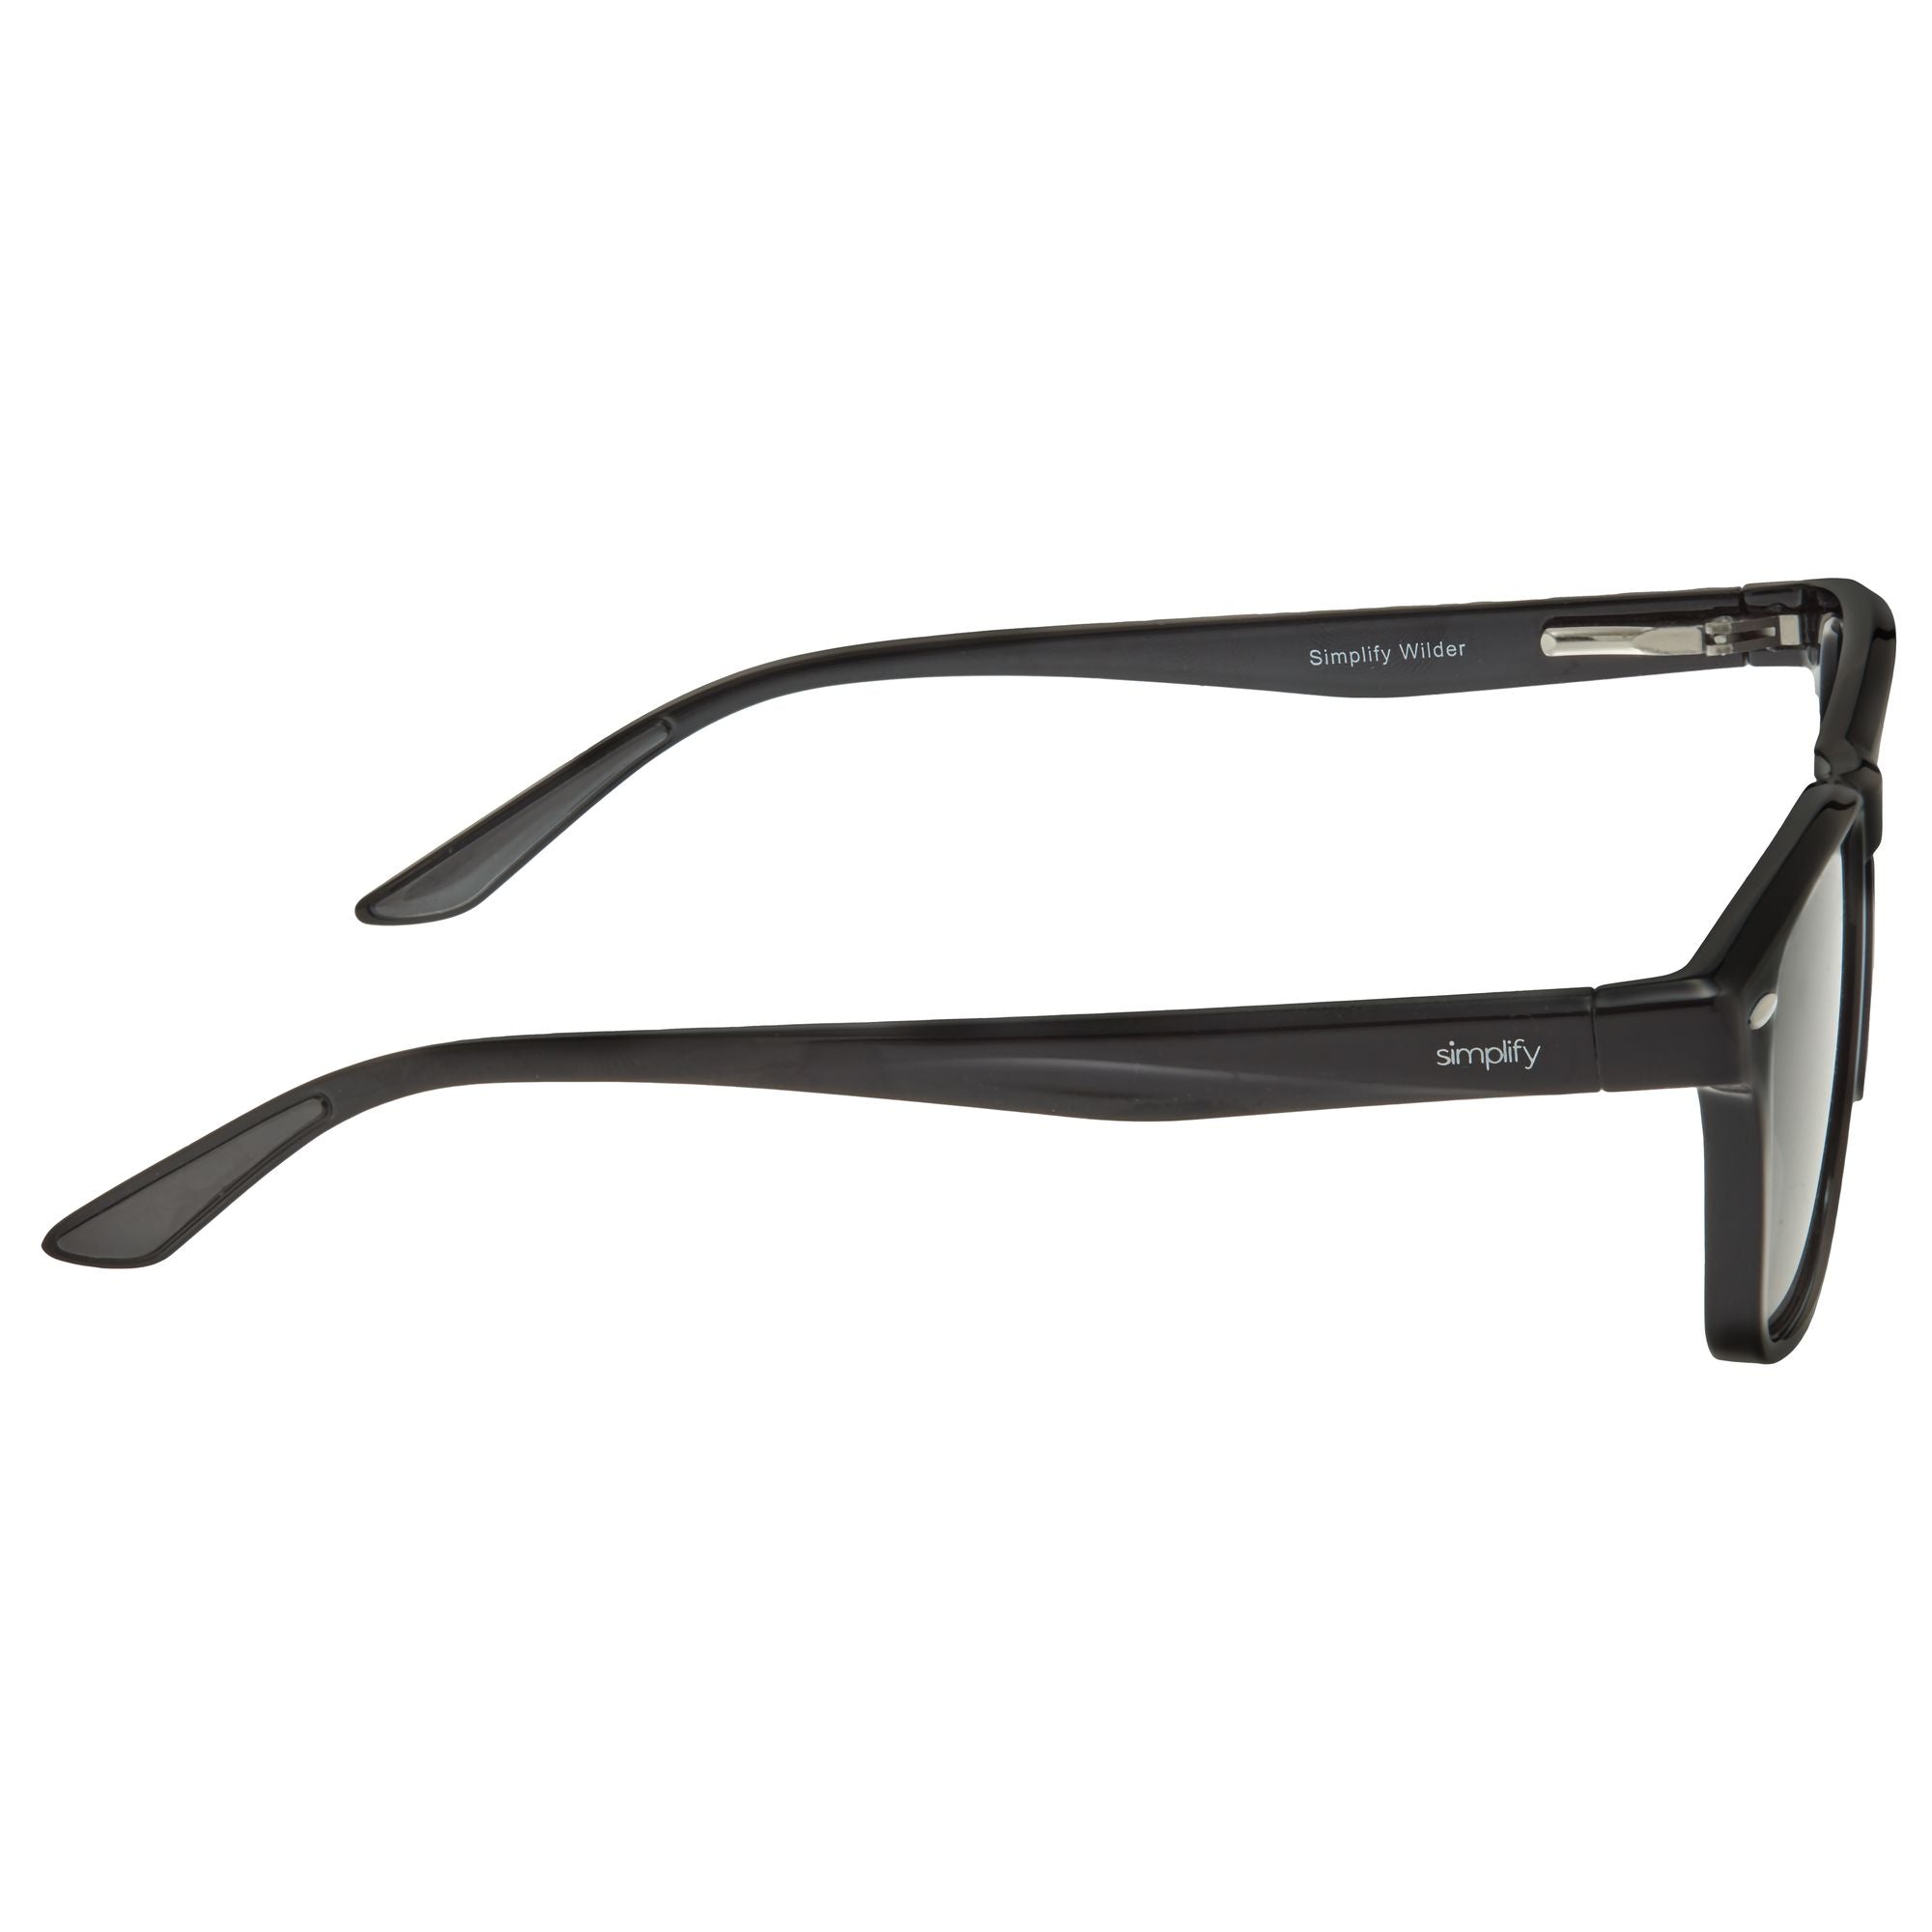 Simplify Wilder Polarized Sunglasses - Black/Black - SSU130-C2